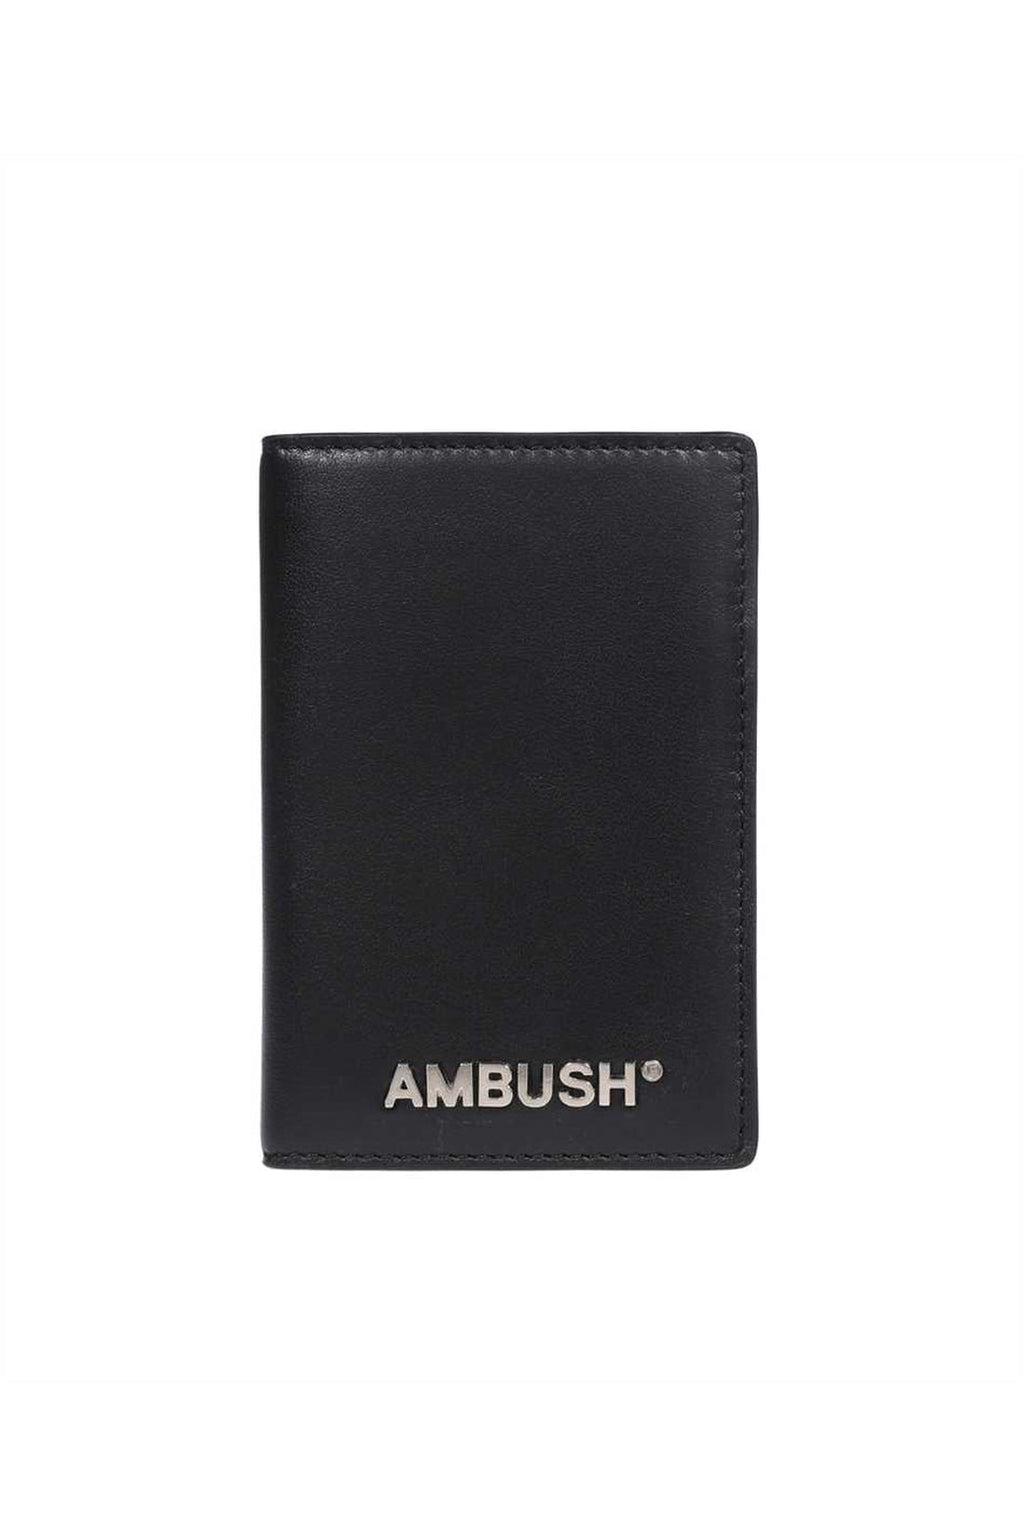 AMBUSH-OUTLET-SALE-Logo detail leather card holder-ARCHIVIST